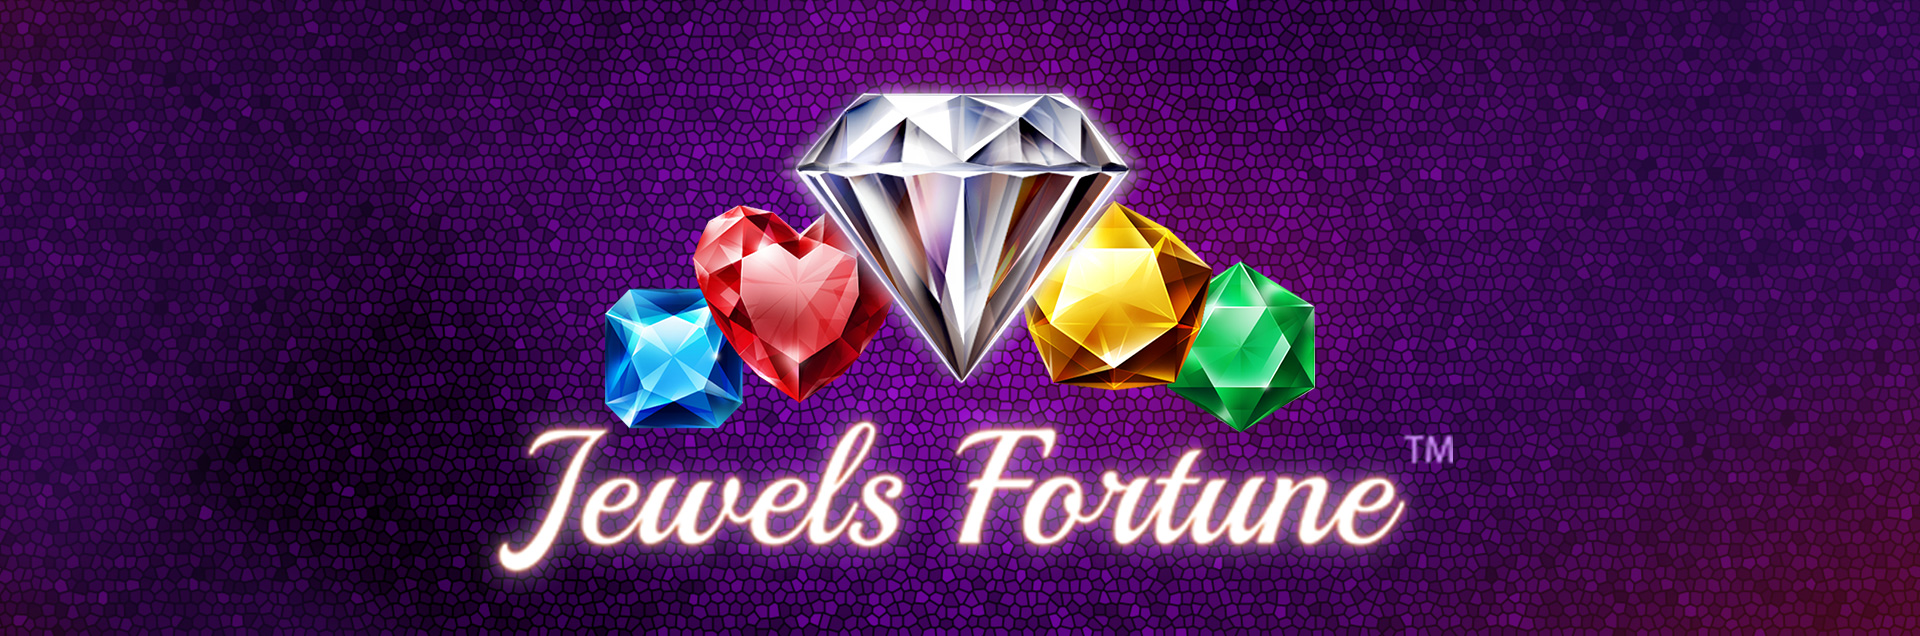 Jewels Fortune header